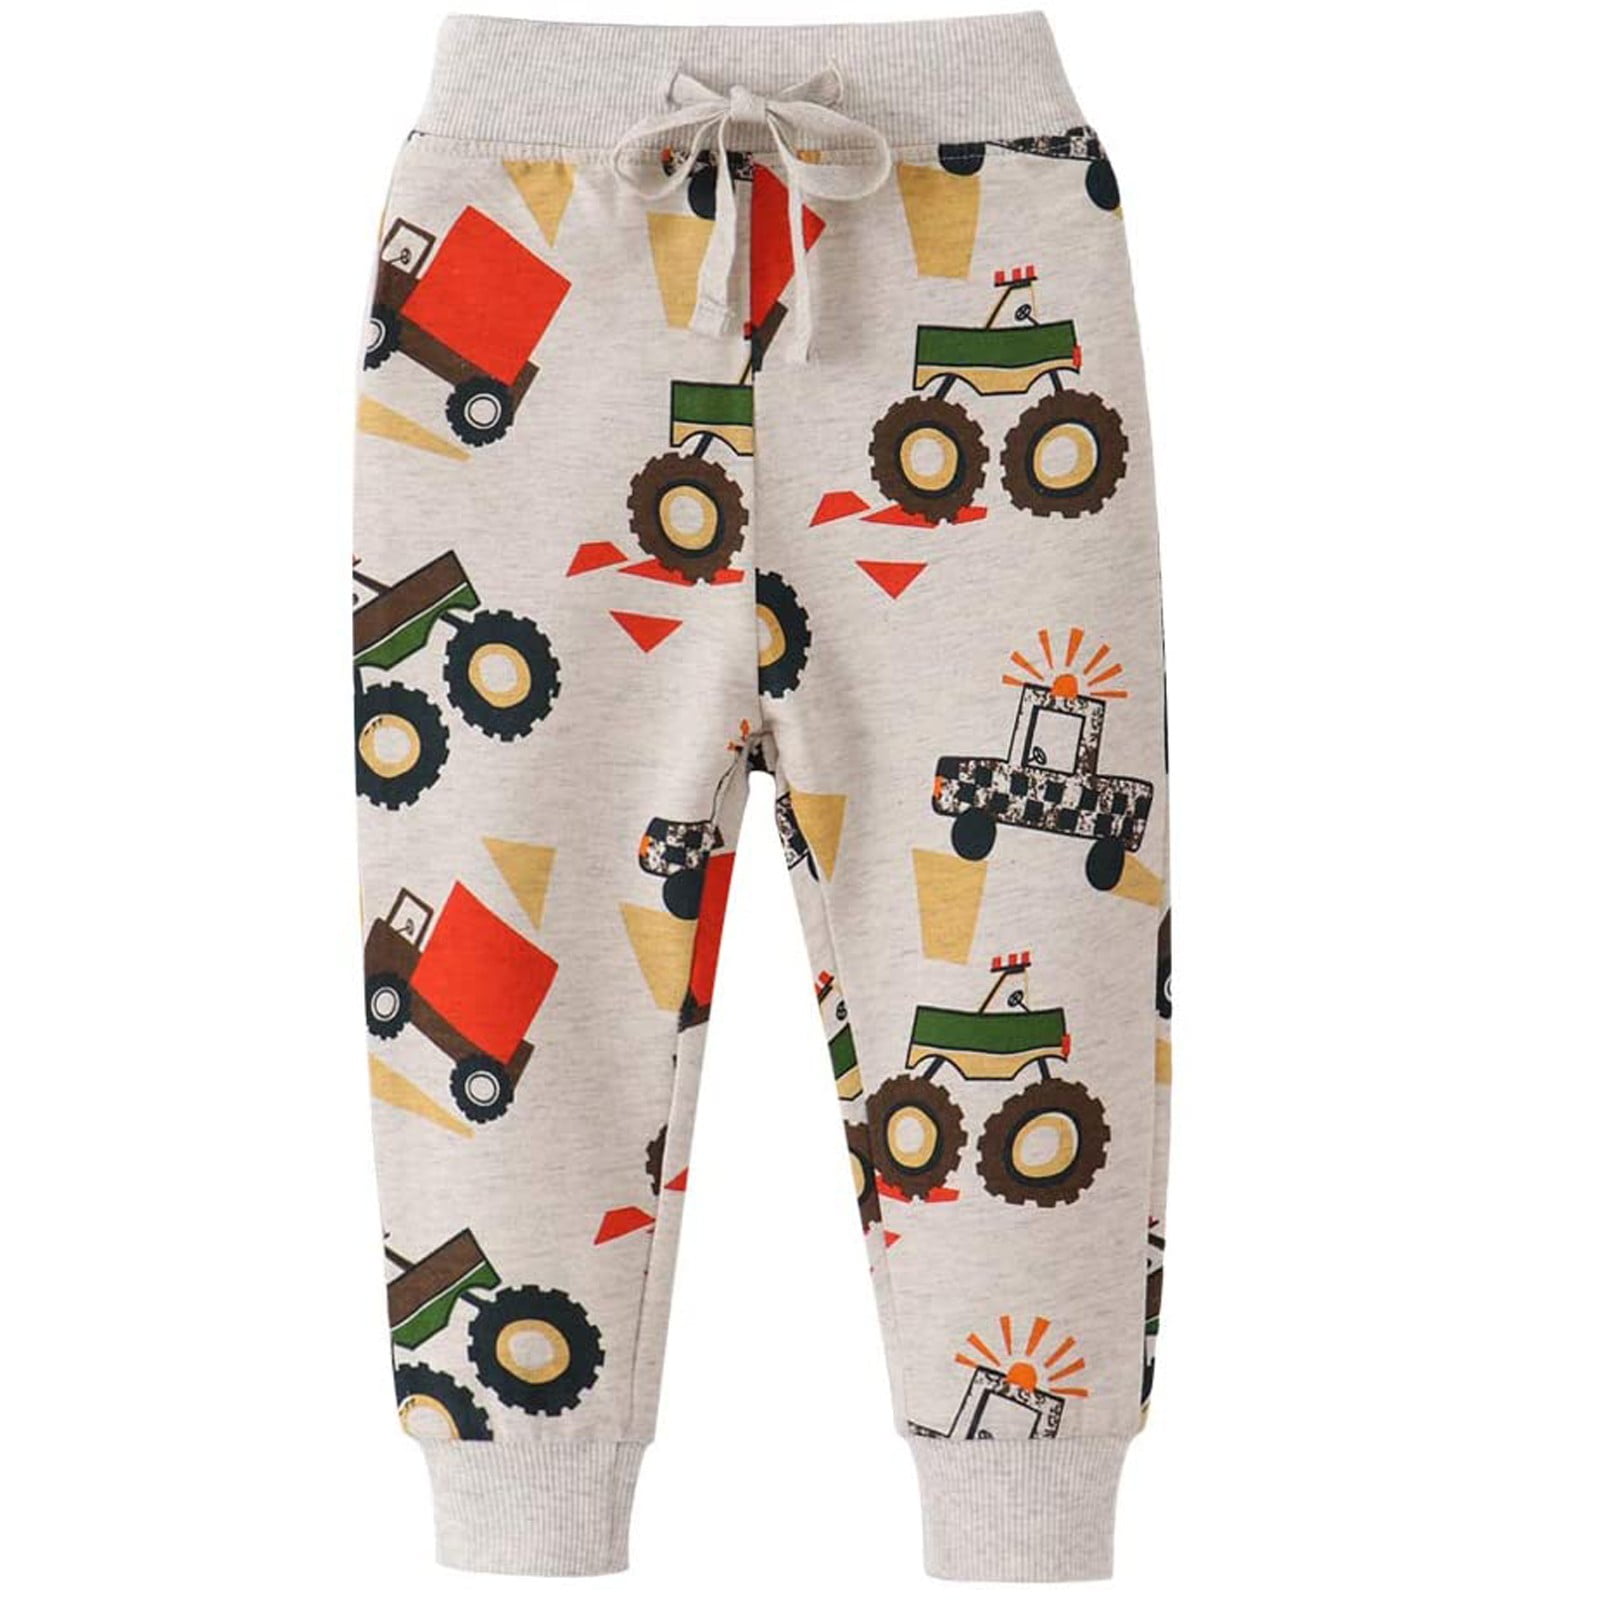 Uuszgmr Baby Pants For Boys Girls Sweatpants Drawstring Pants Animal ...